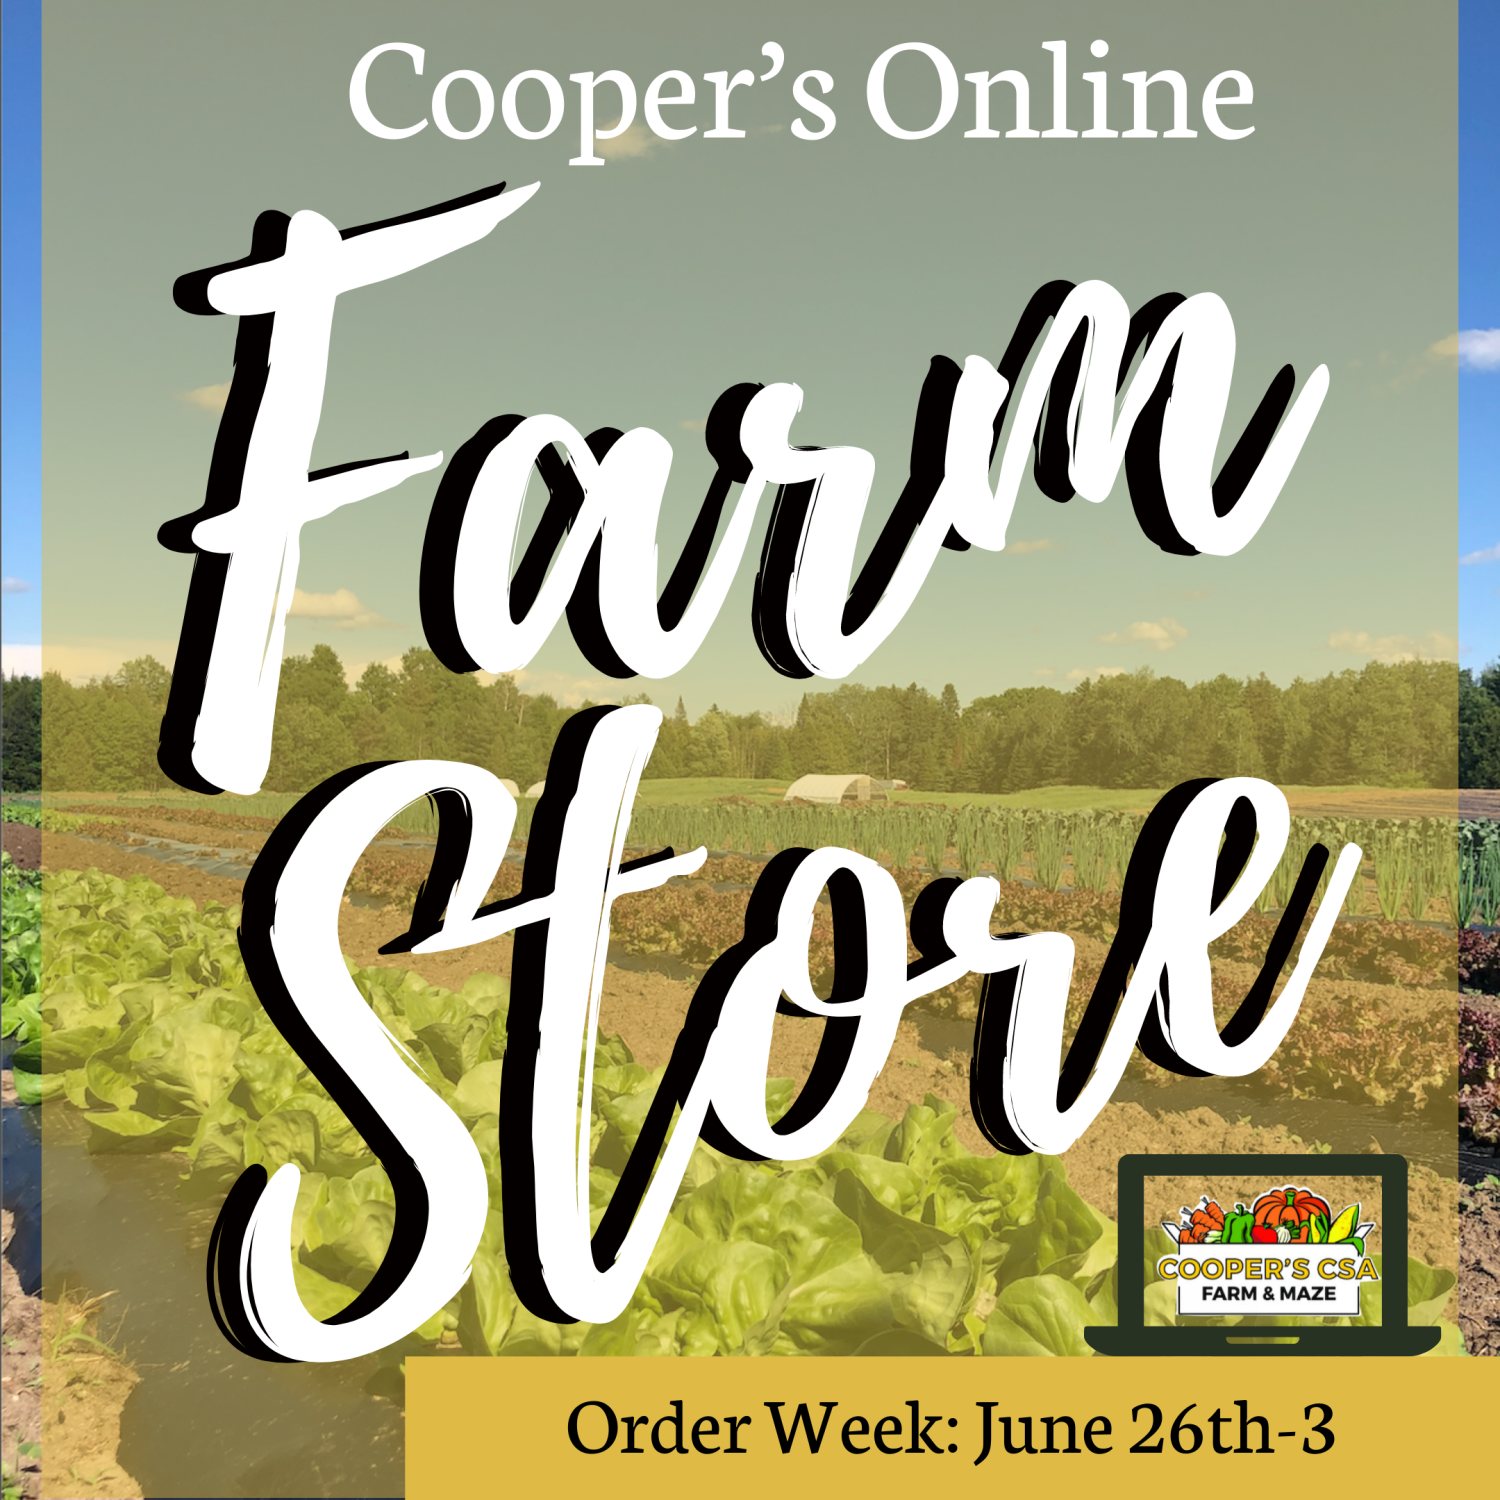 Previous Happening: Coopers CSA Online FarmStore- Order week June 26th July 1st